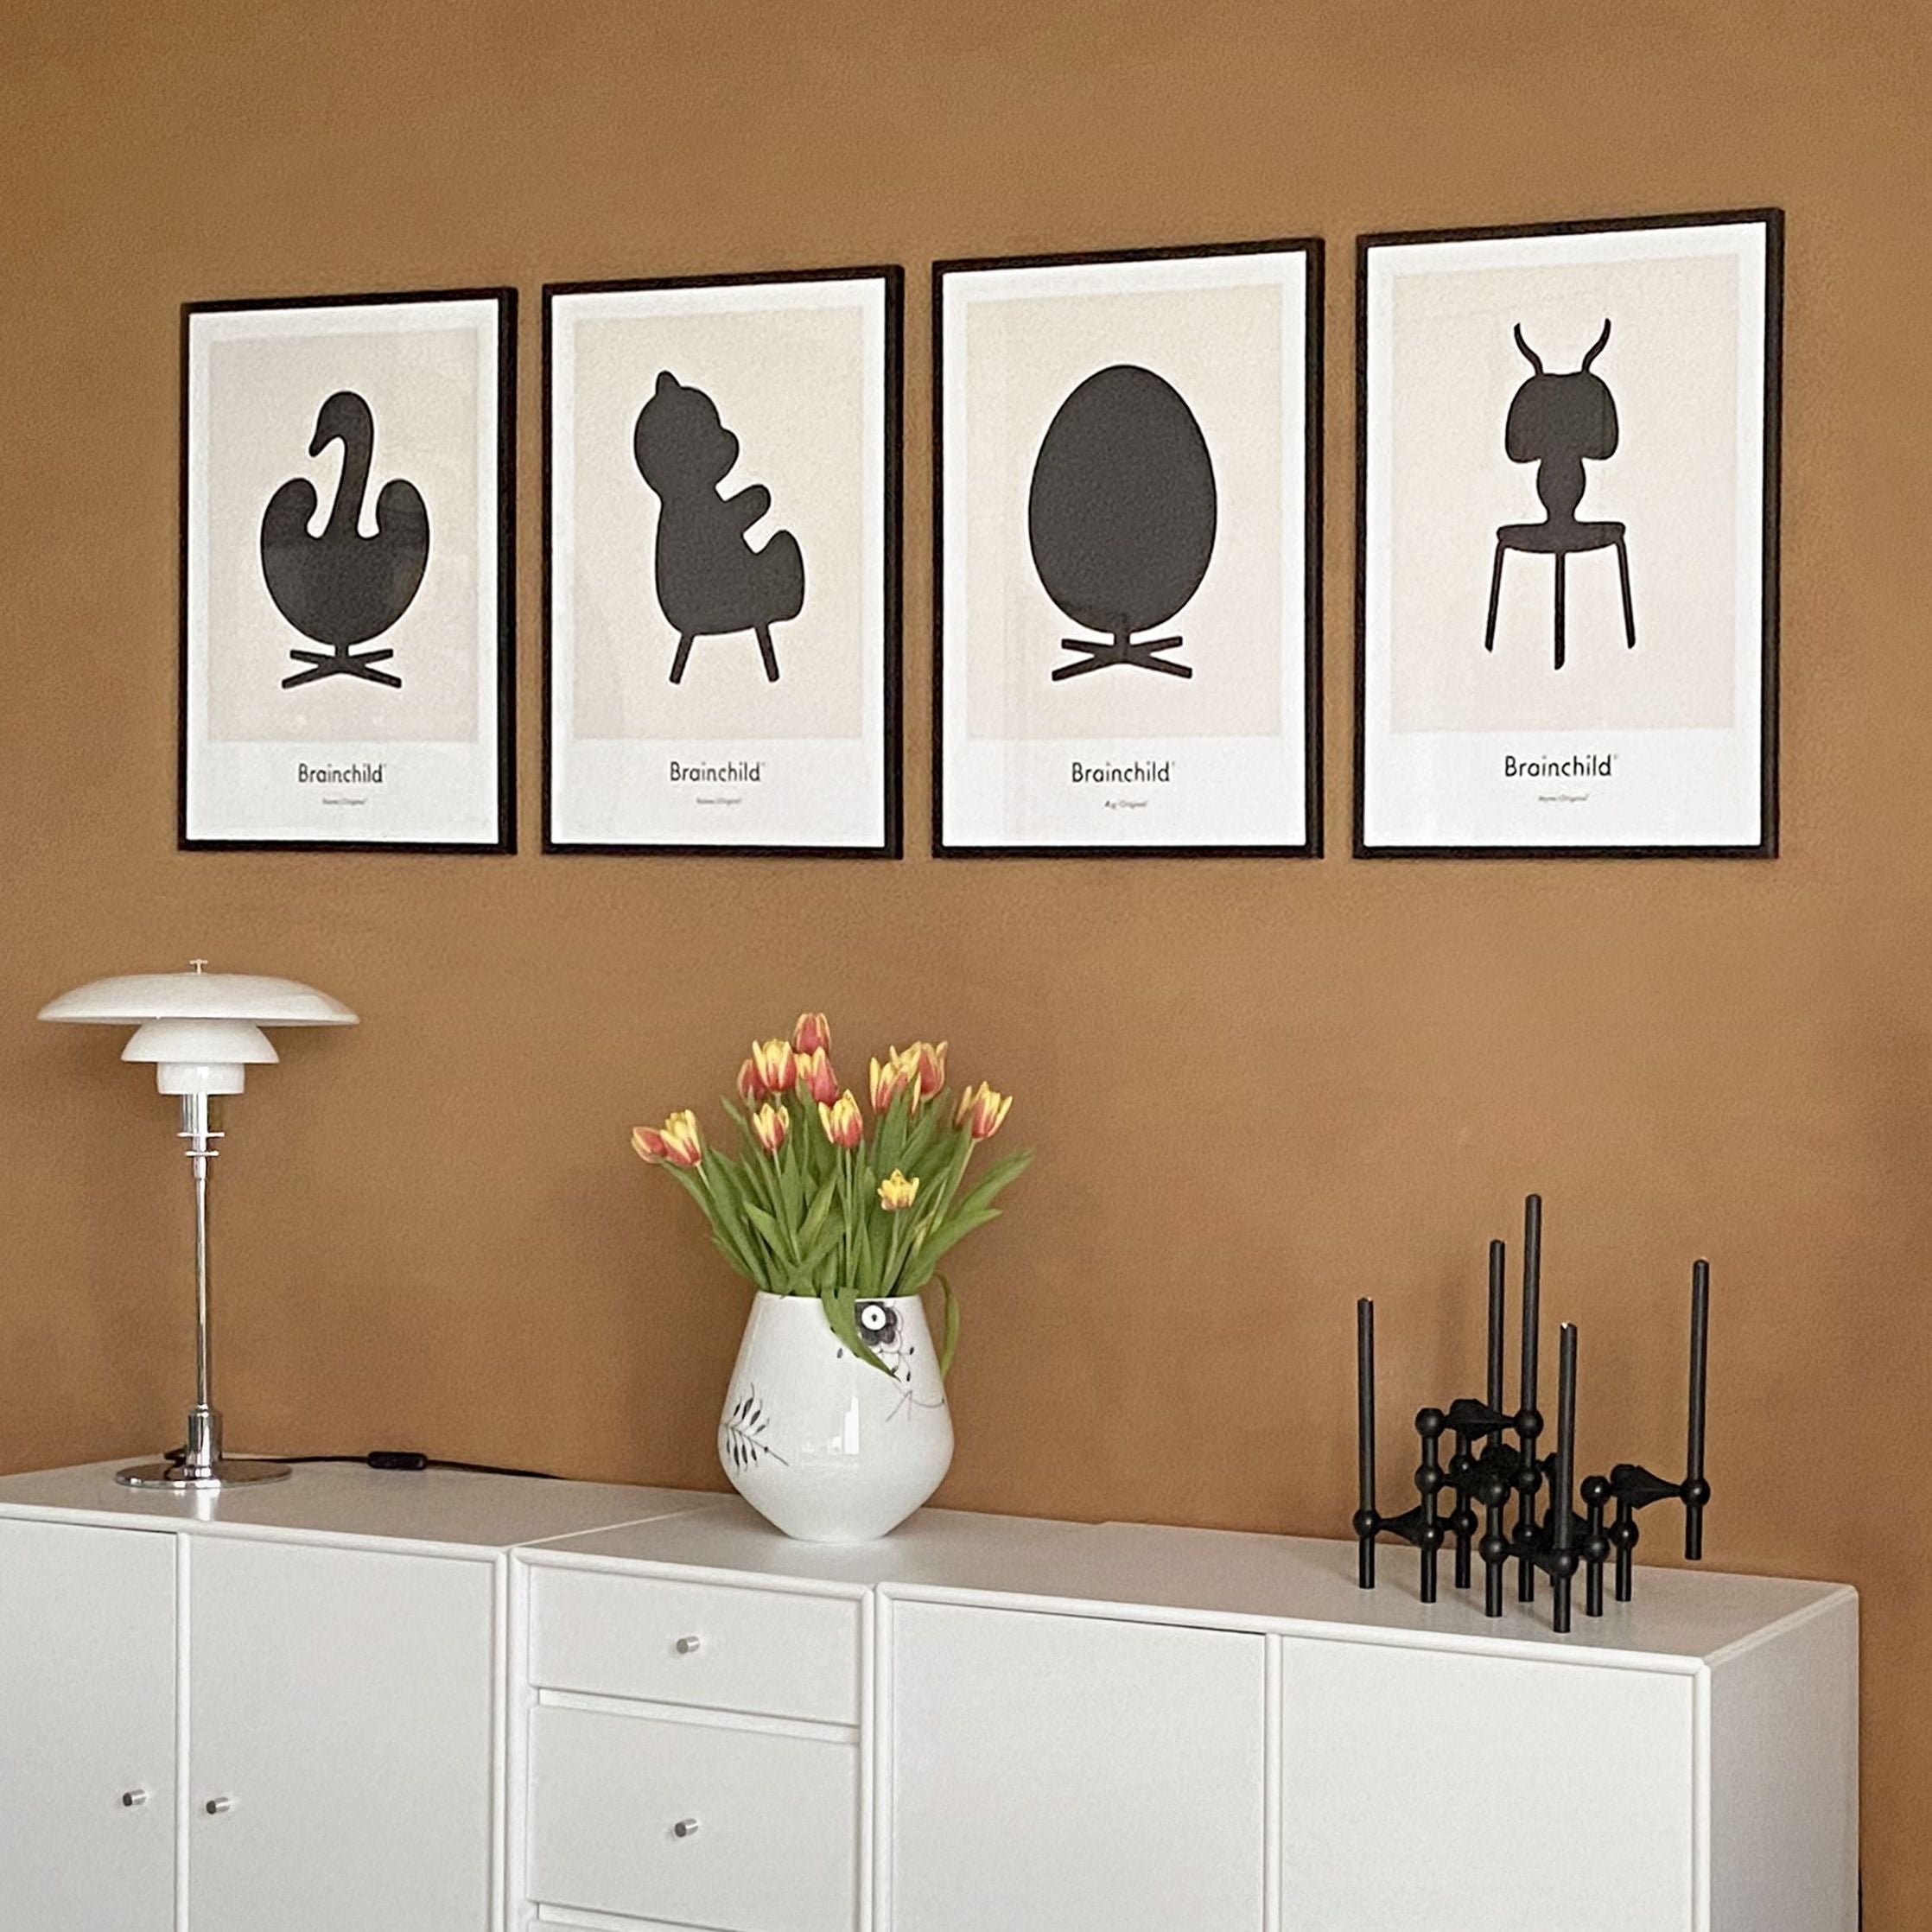 Brainchild Ant Design Icon Poster ohne Rahmen 70 X100 Cm, Grau